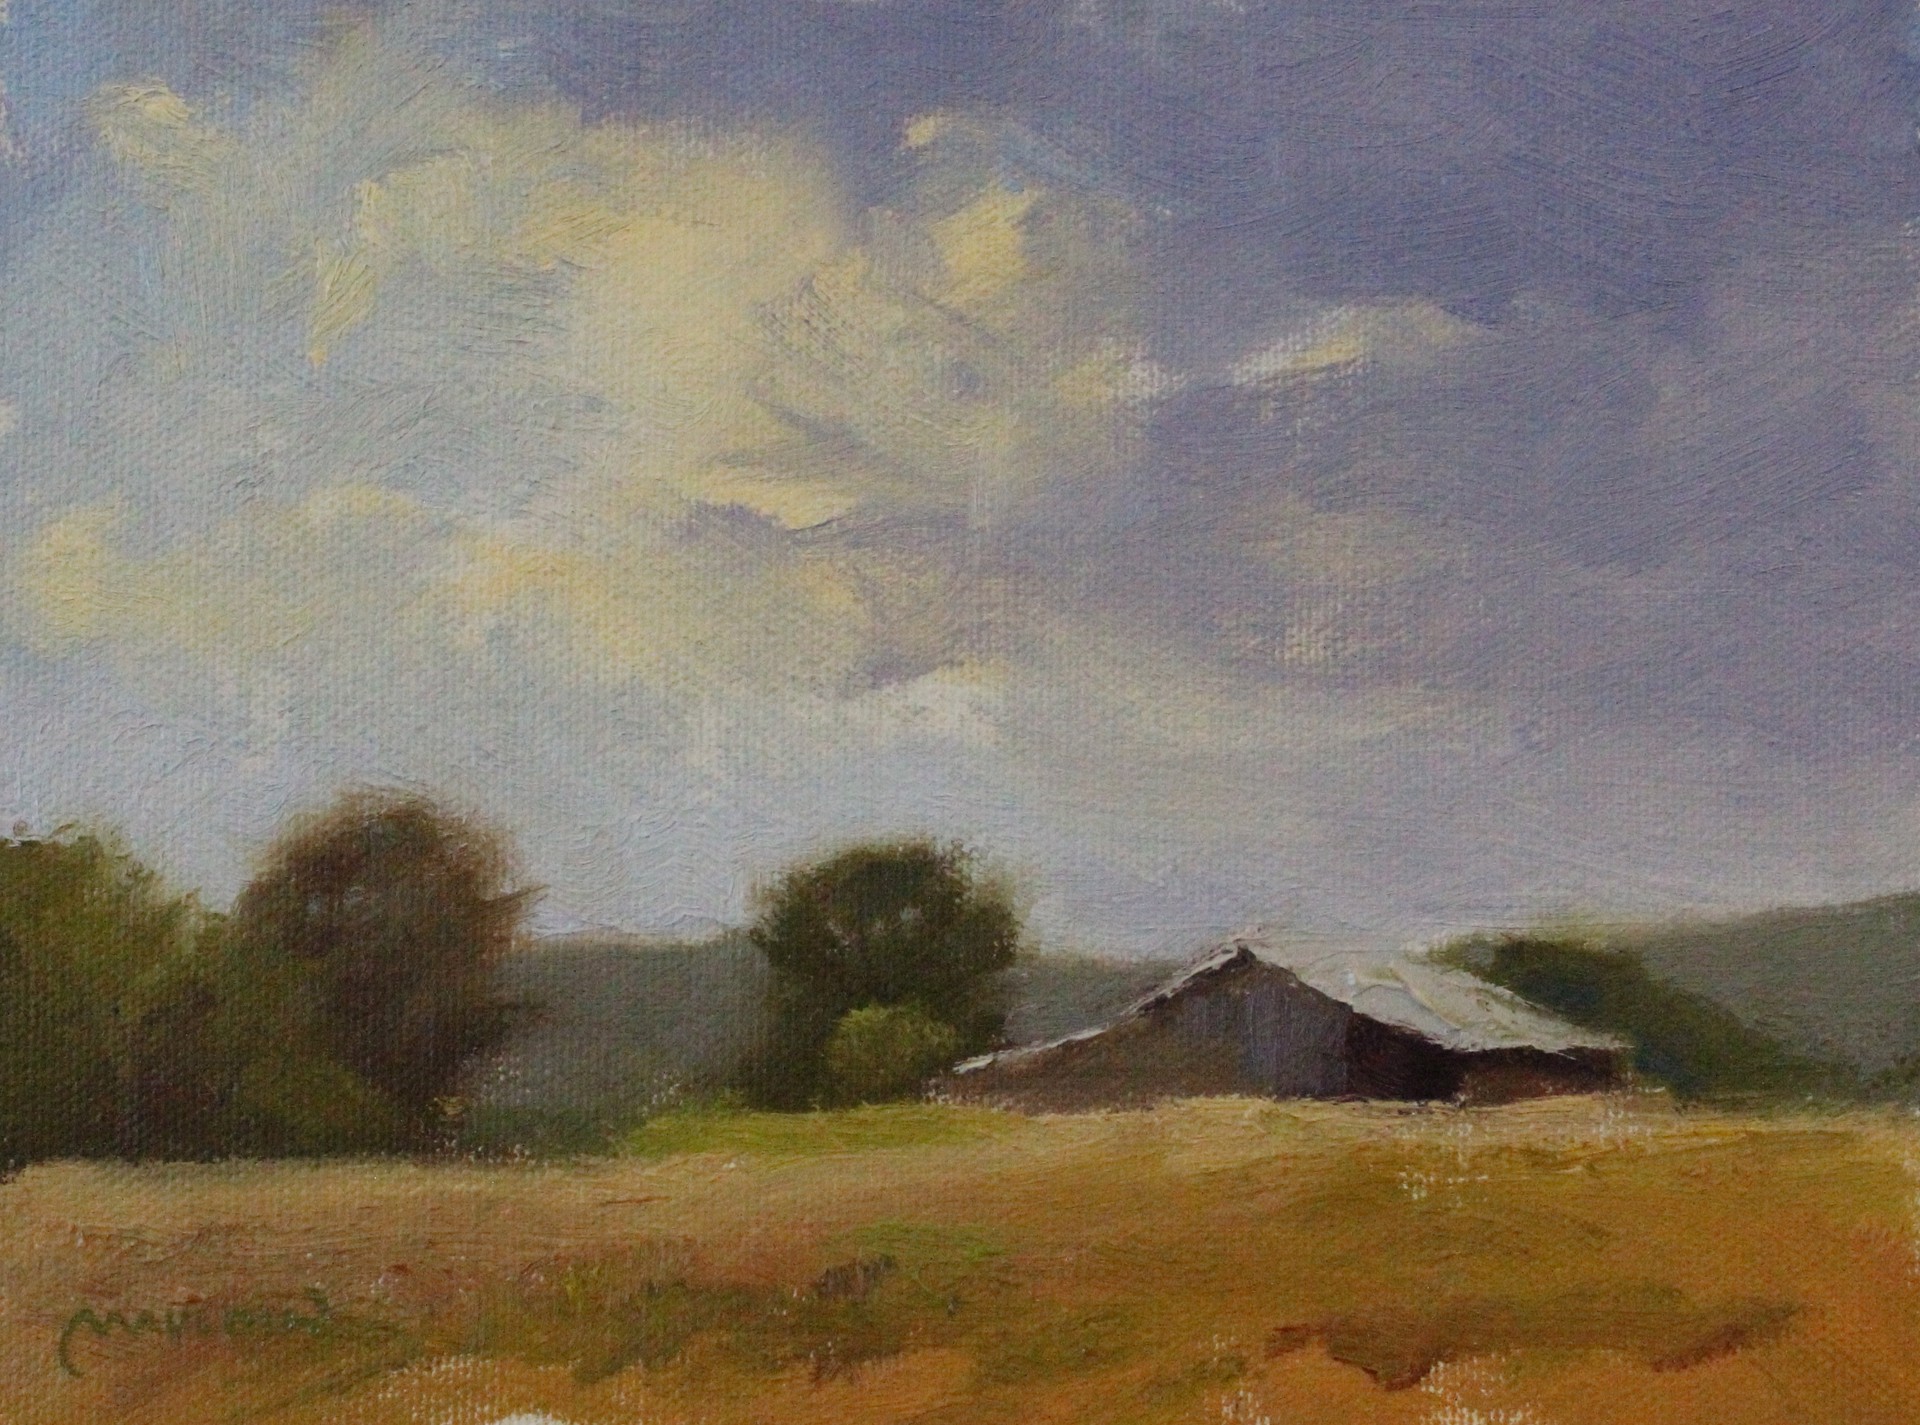 Quitaque Barn by Chuck Mauldin